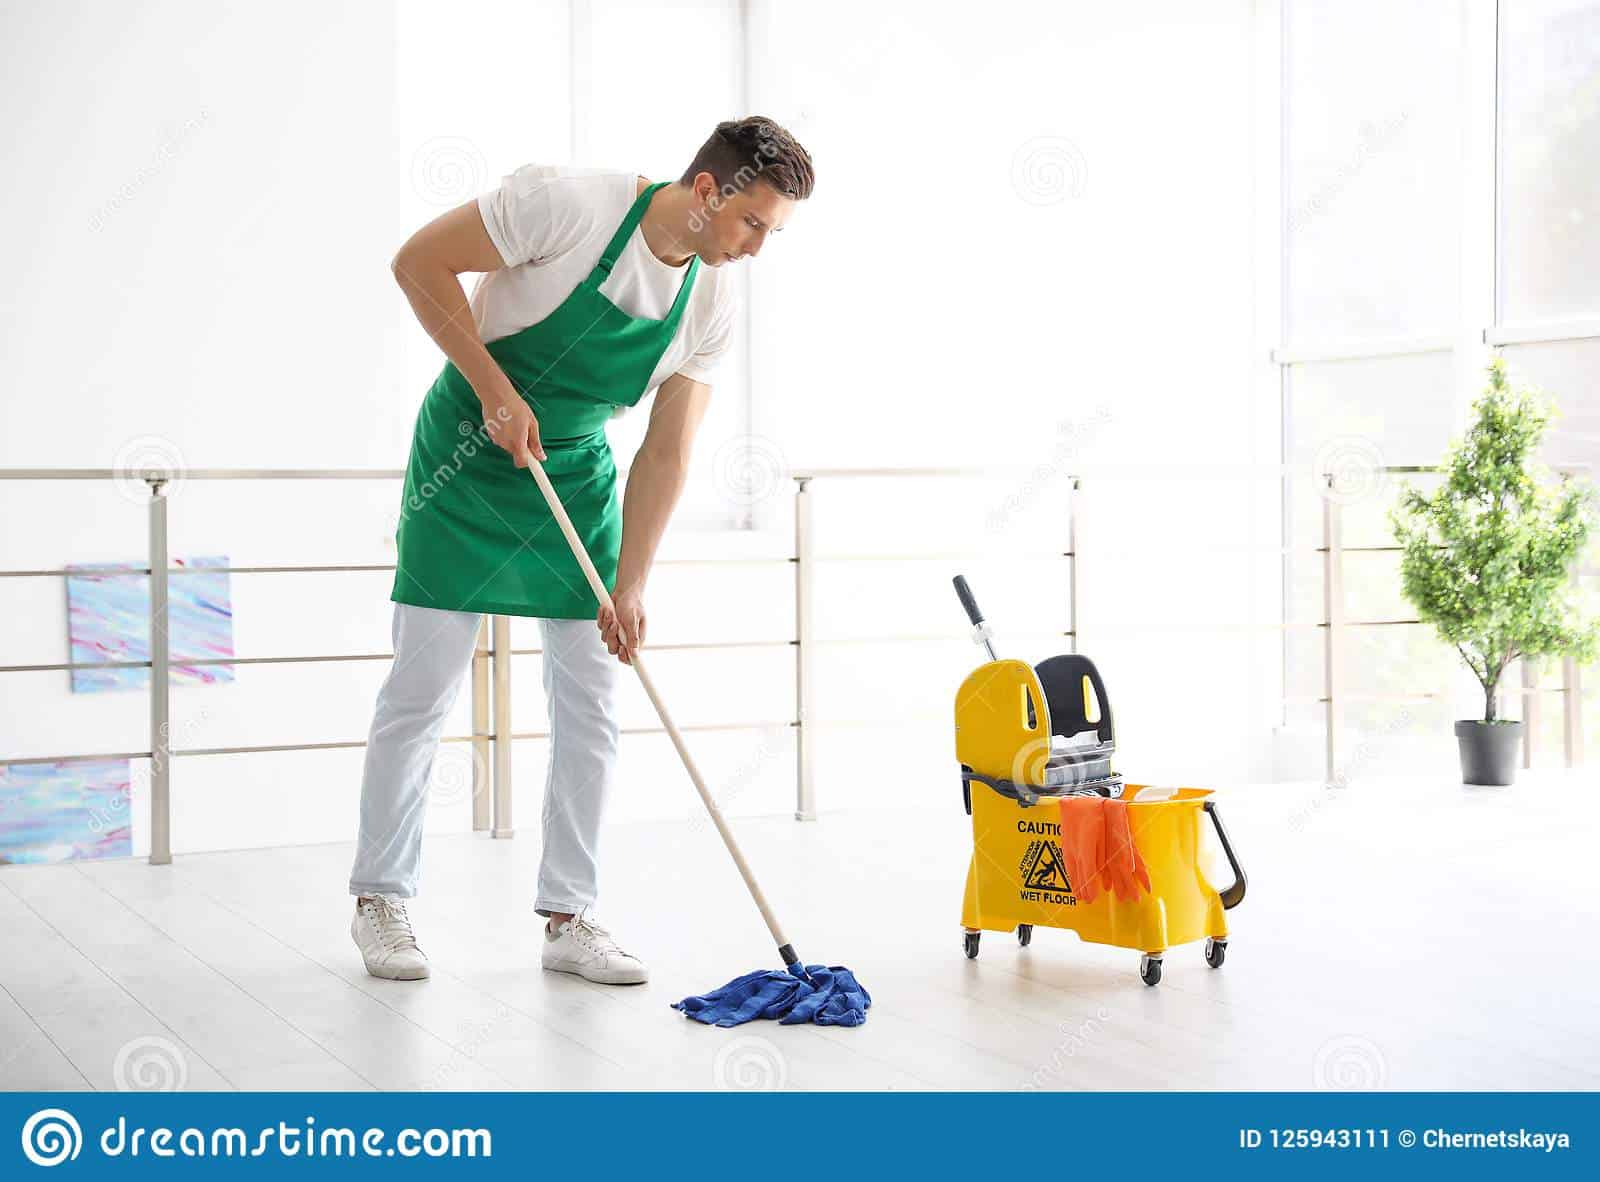 young man mop cleaning floor indoors 125943111